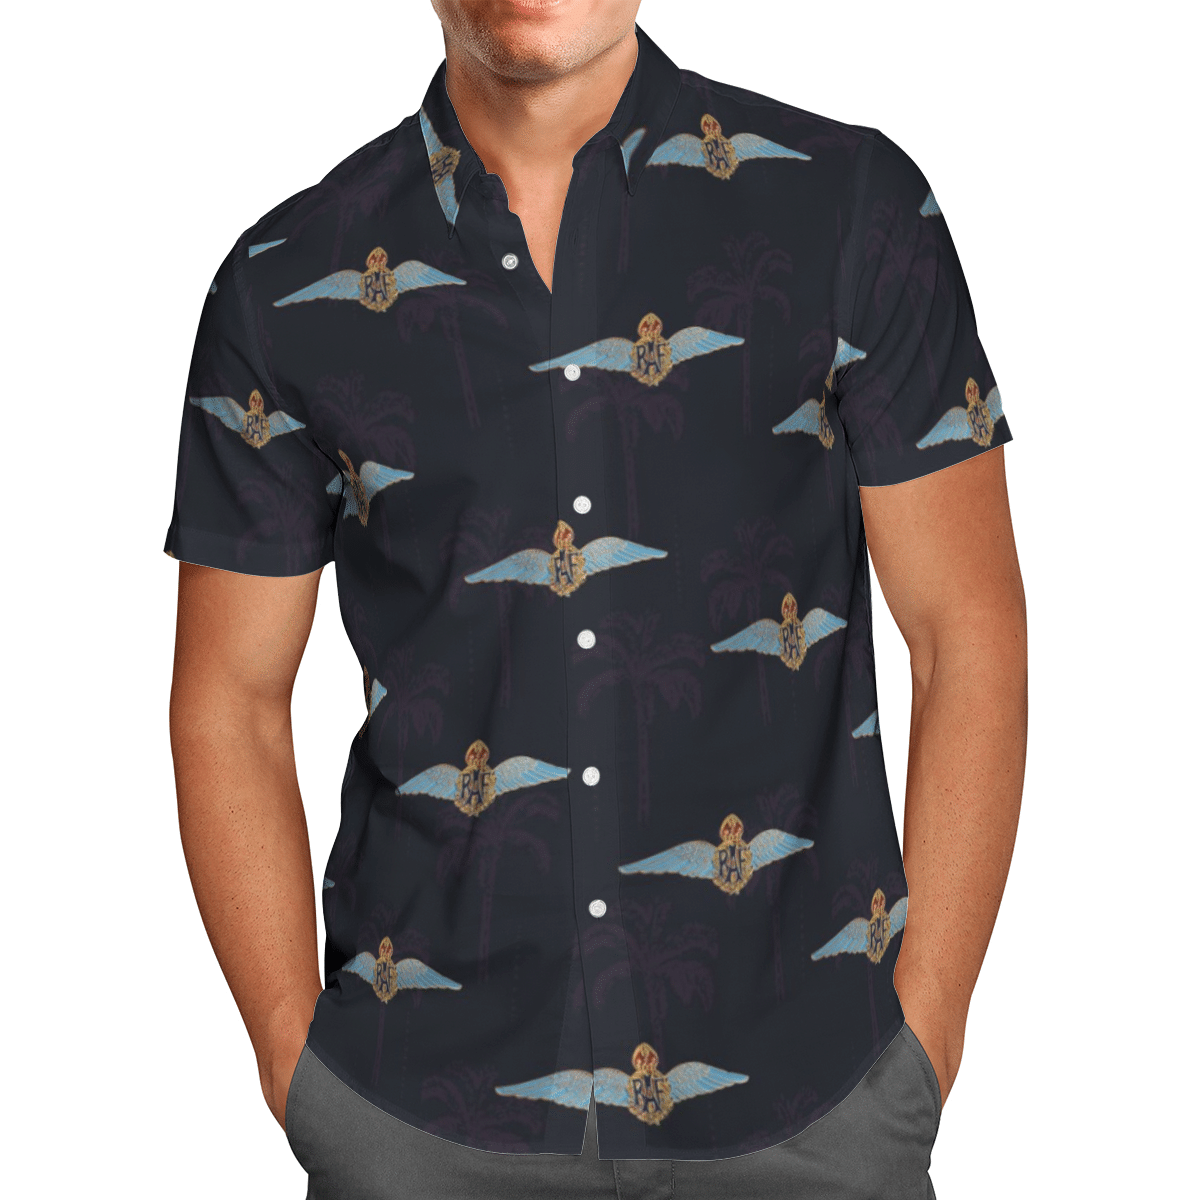 HOT Sweetheart Wings Shirt All Over Print Tropical Shirt1